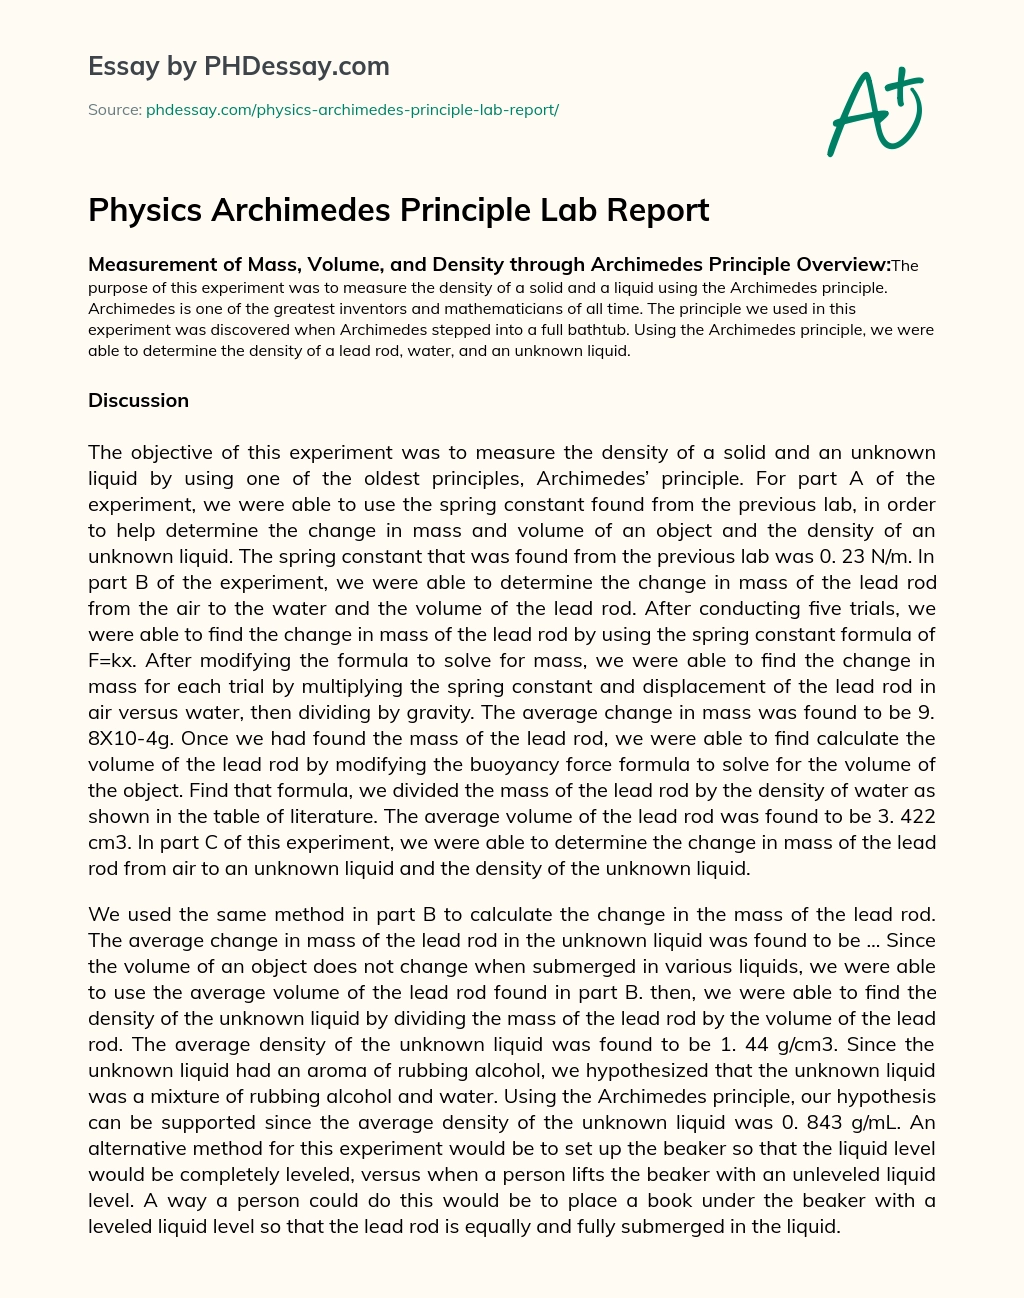 Physics Archimedes Principle Lab Report essay